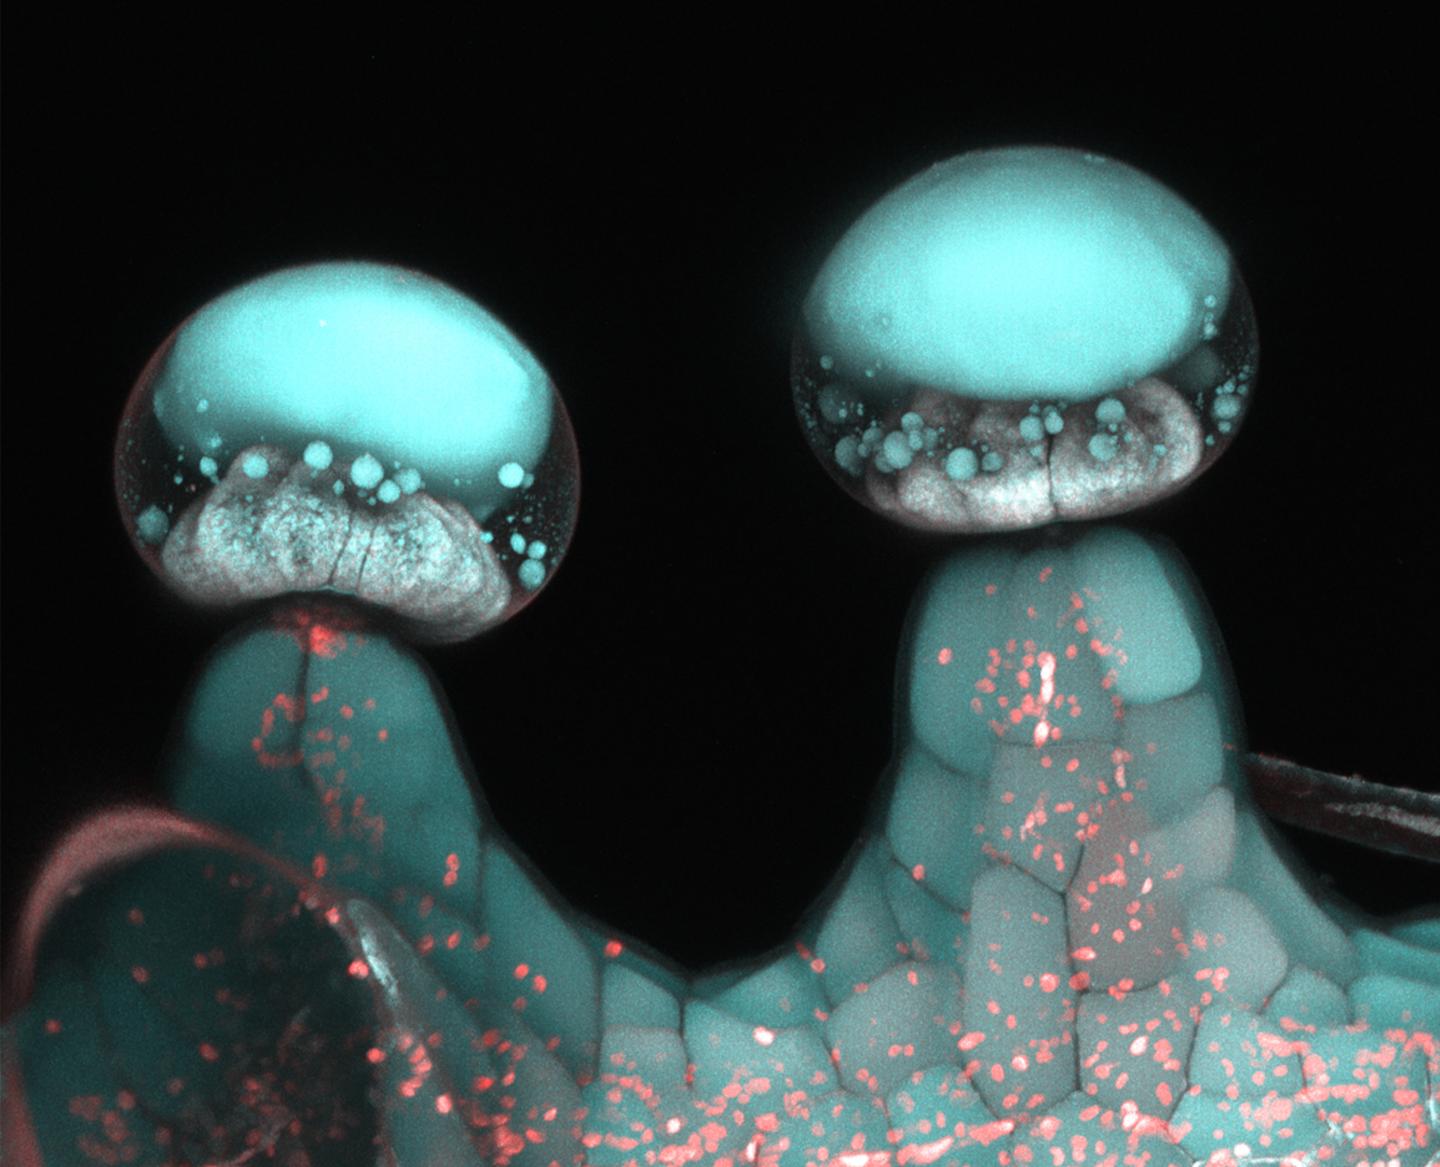 Multi-Photon Microscopy Image of Stalked Glandular Trichome